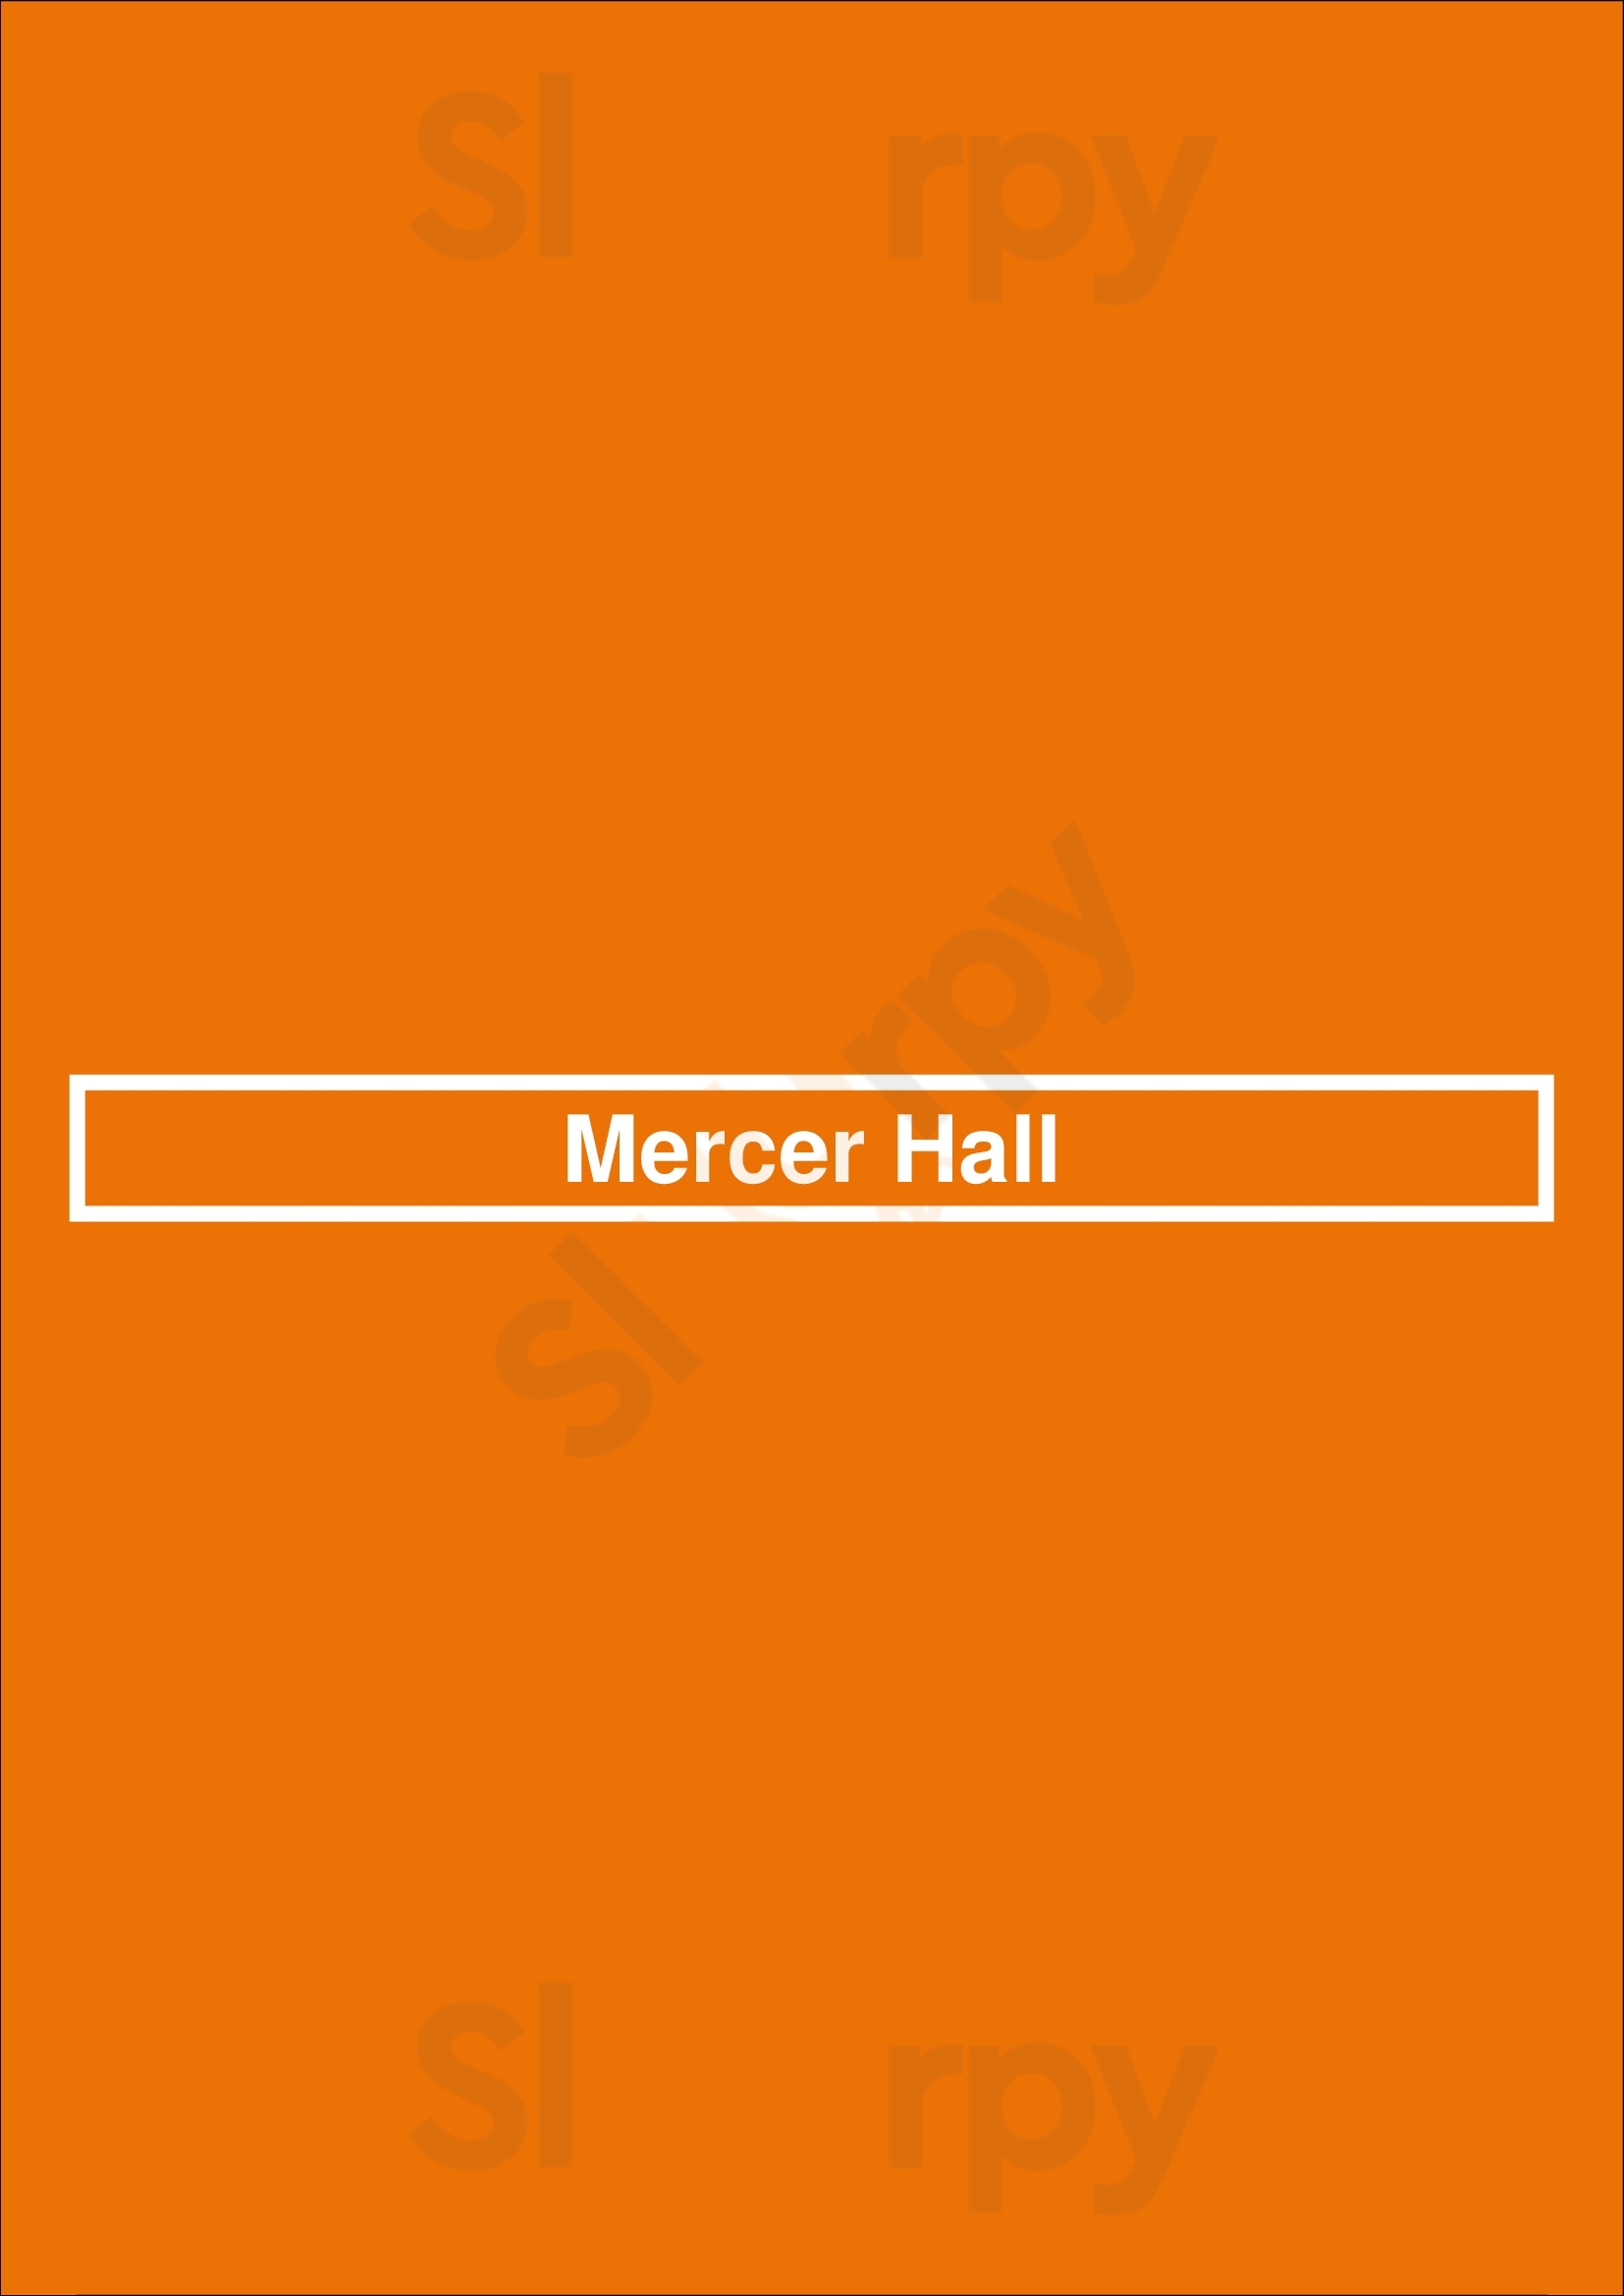 Mercer Kitchen And Beer Hall Stratford Menu - 1